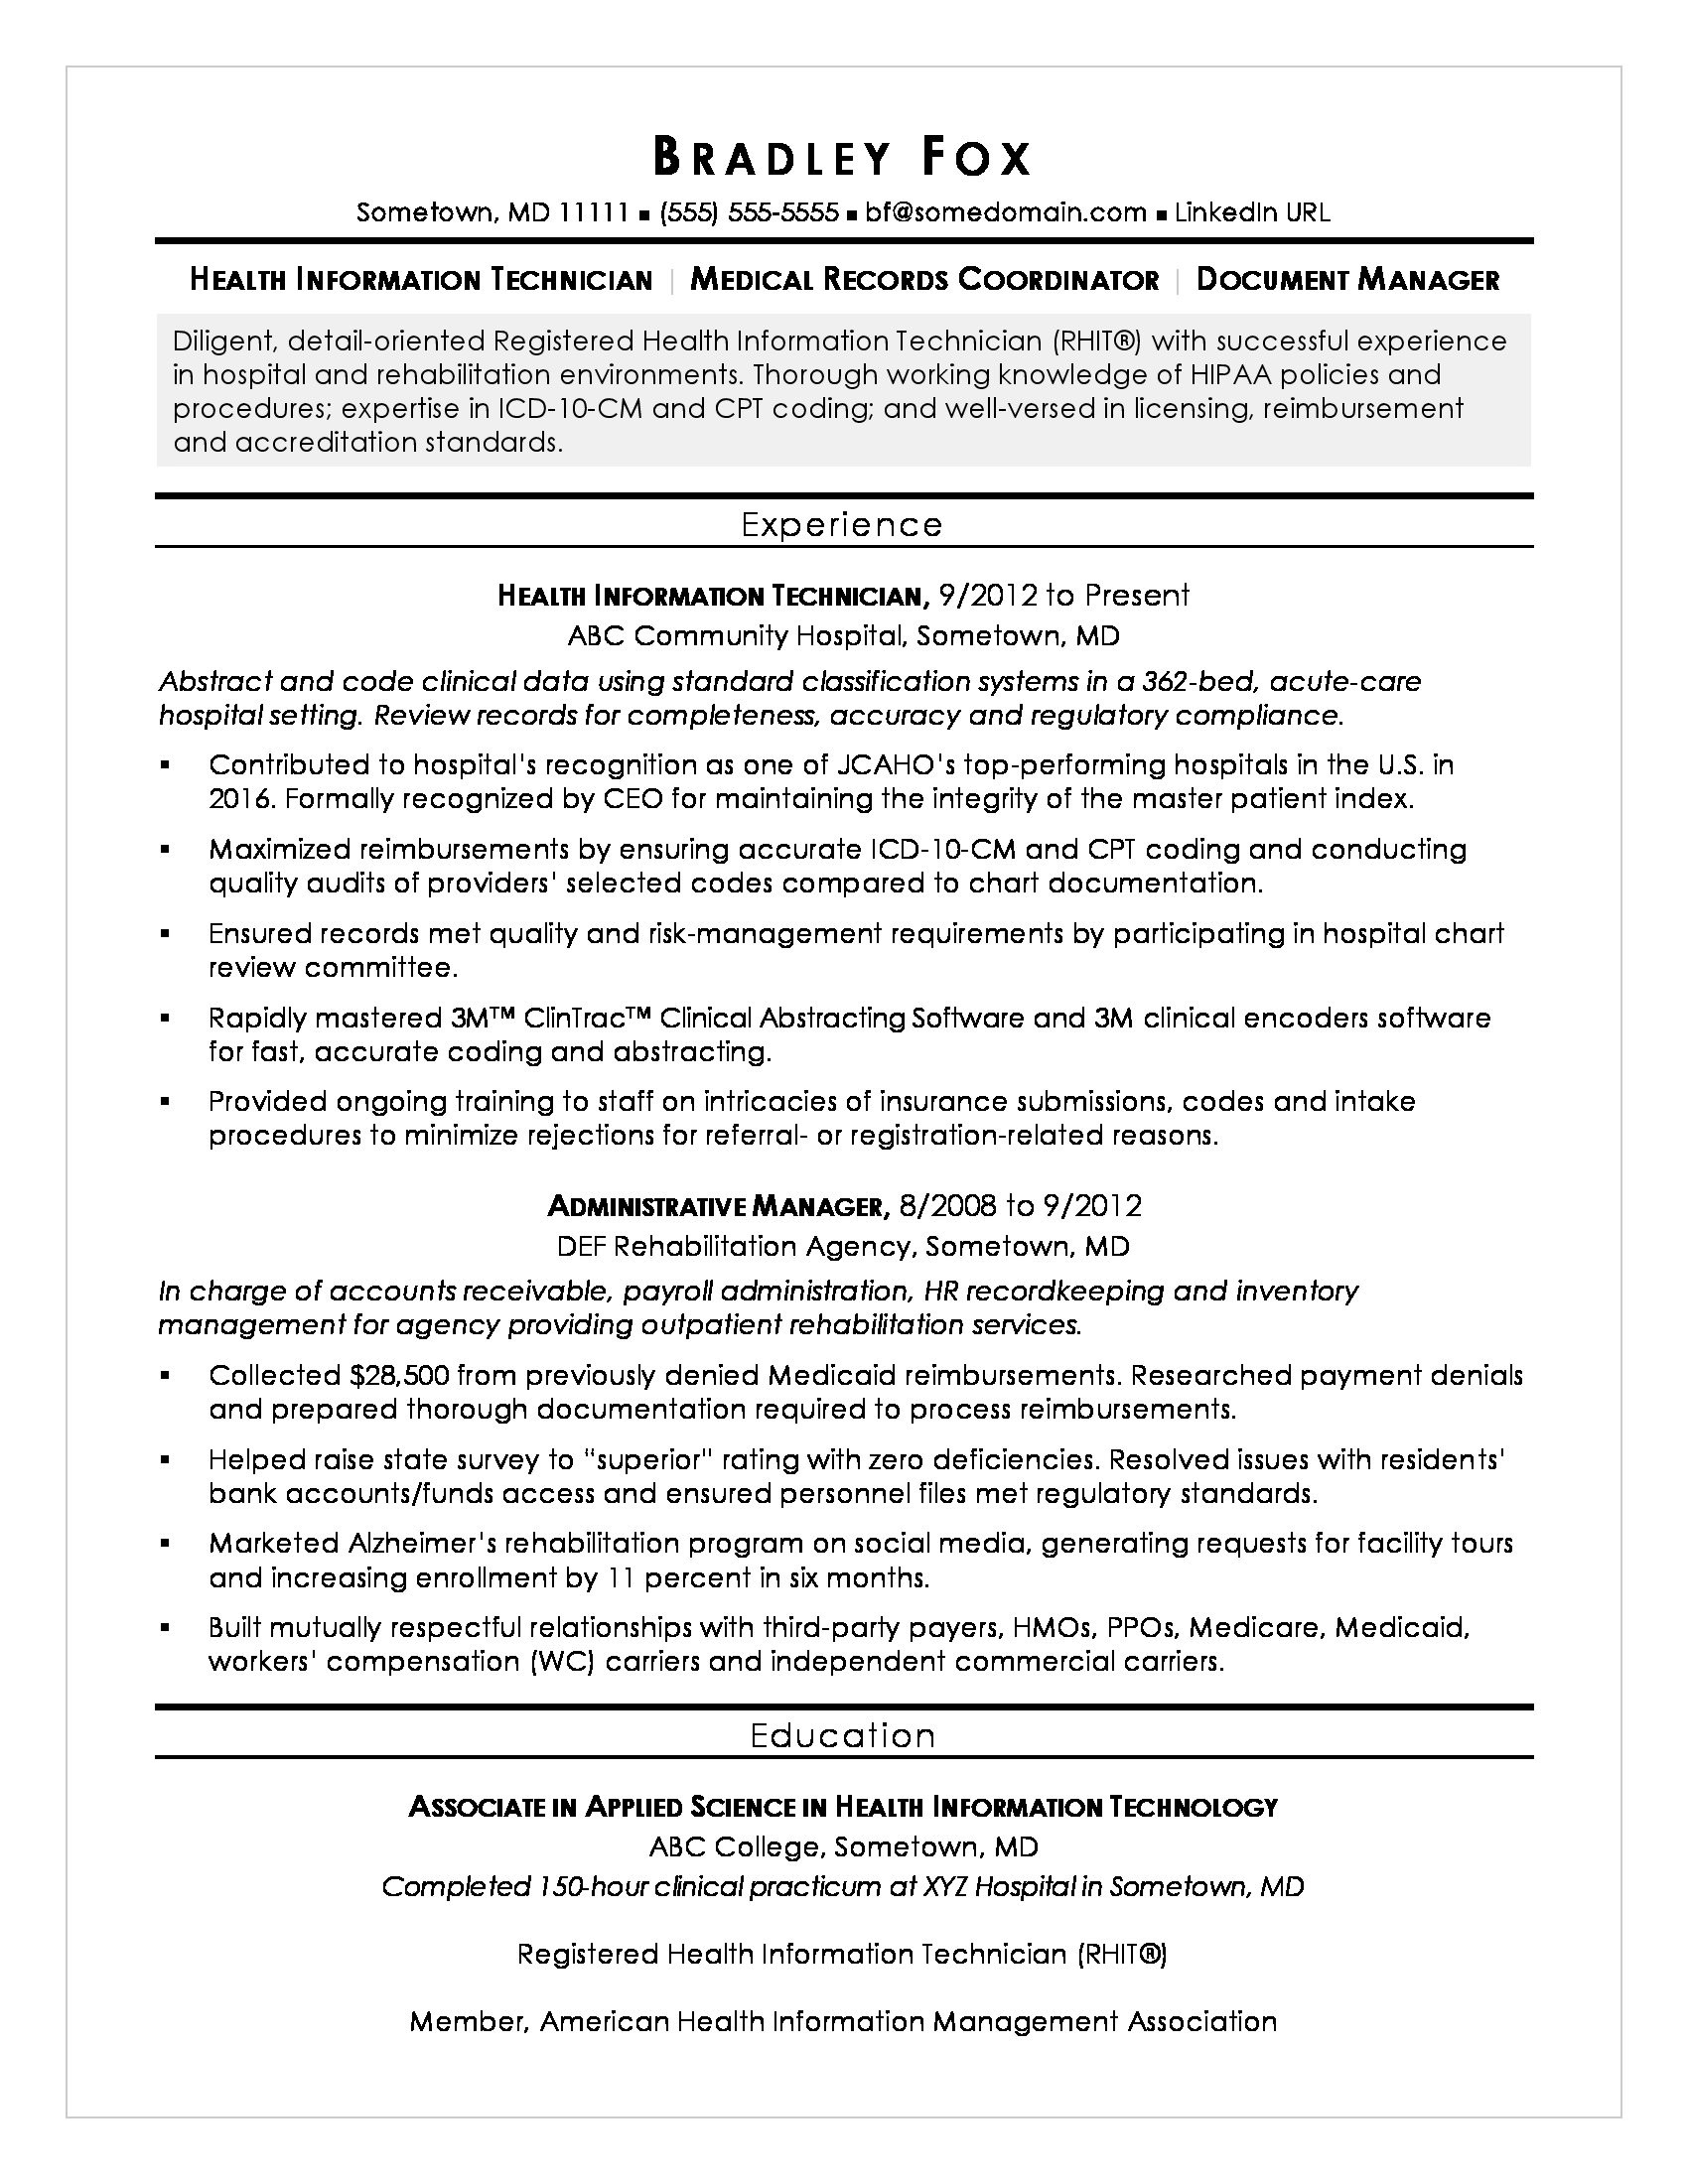 Sample Objectives for Resumes In Healthcare Health Information Technician Sample Resume Monster.com